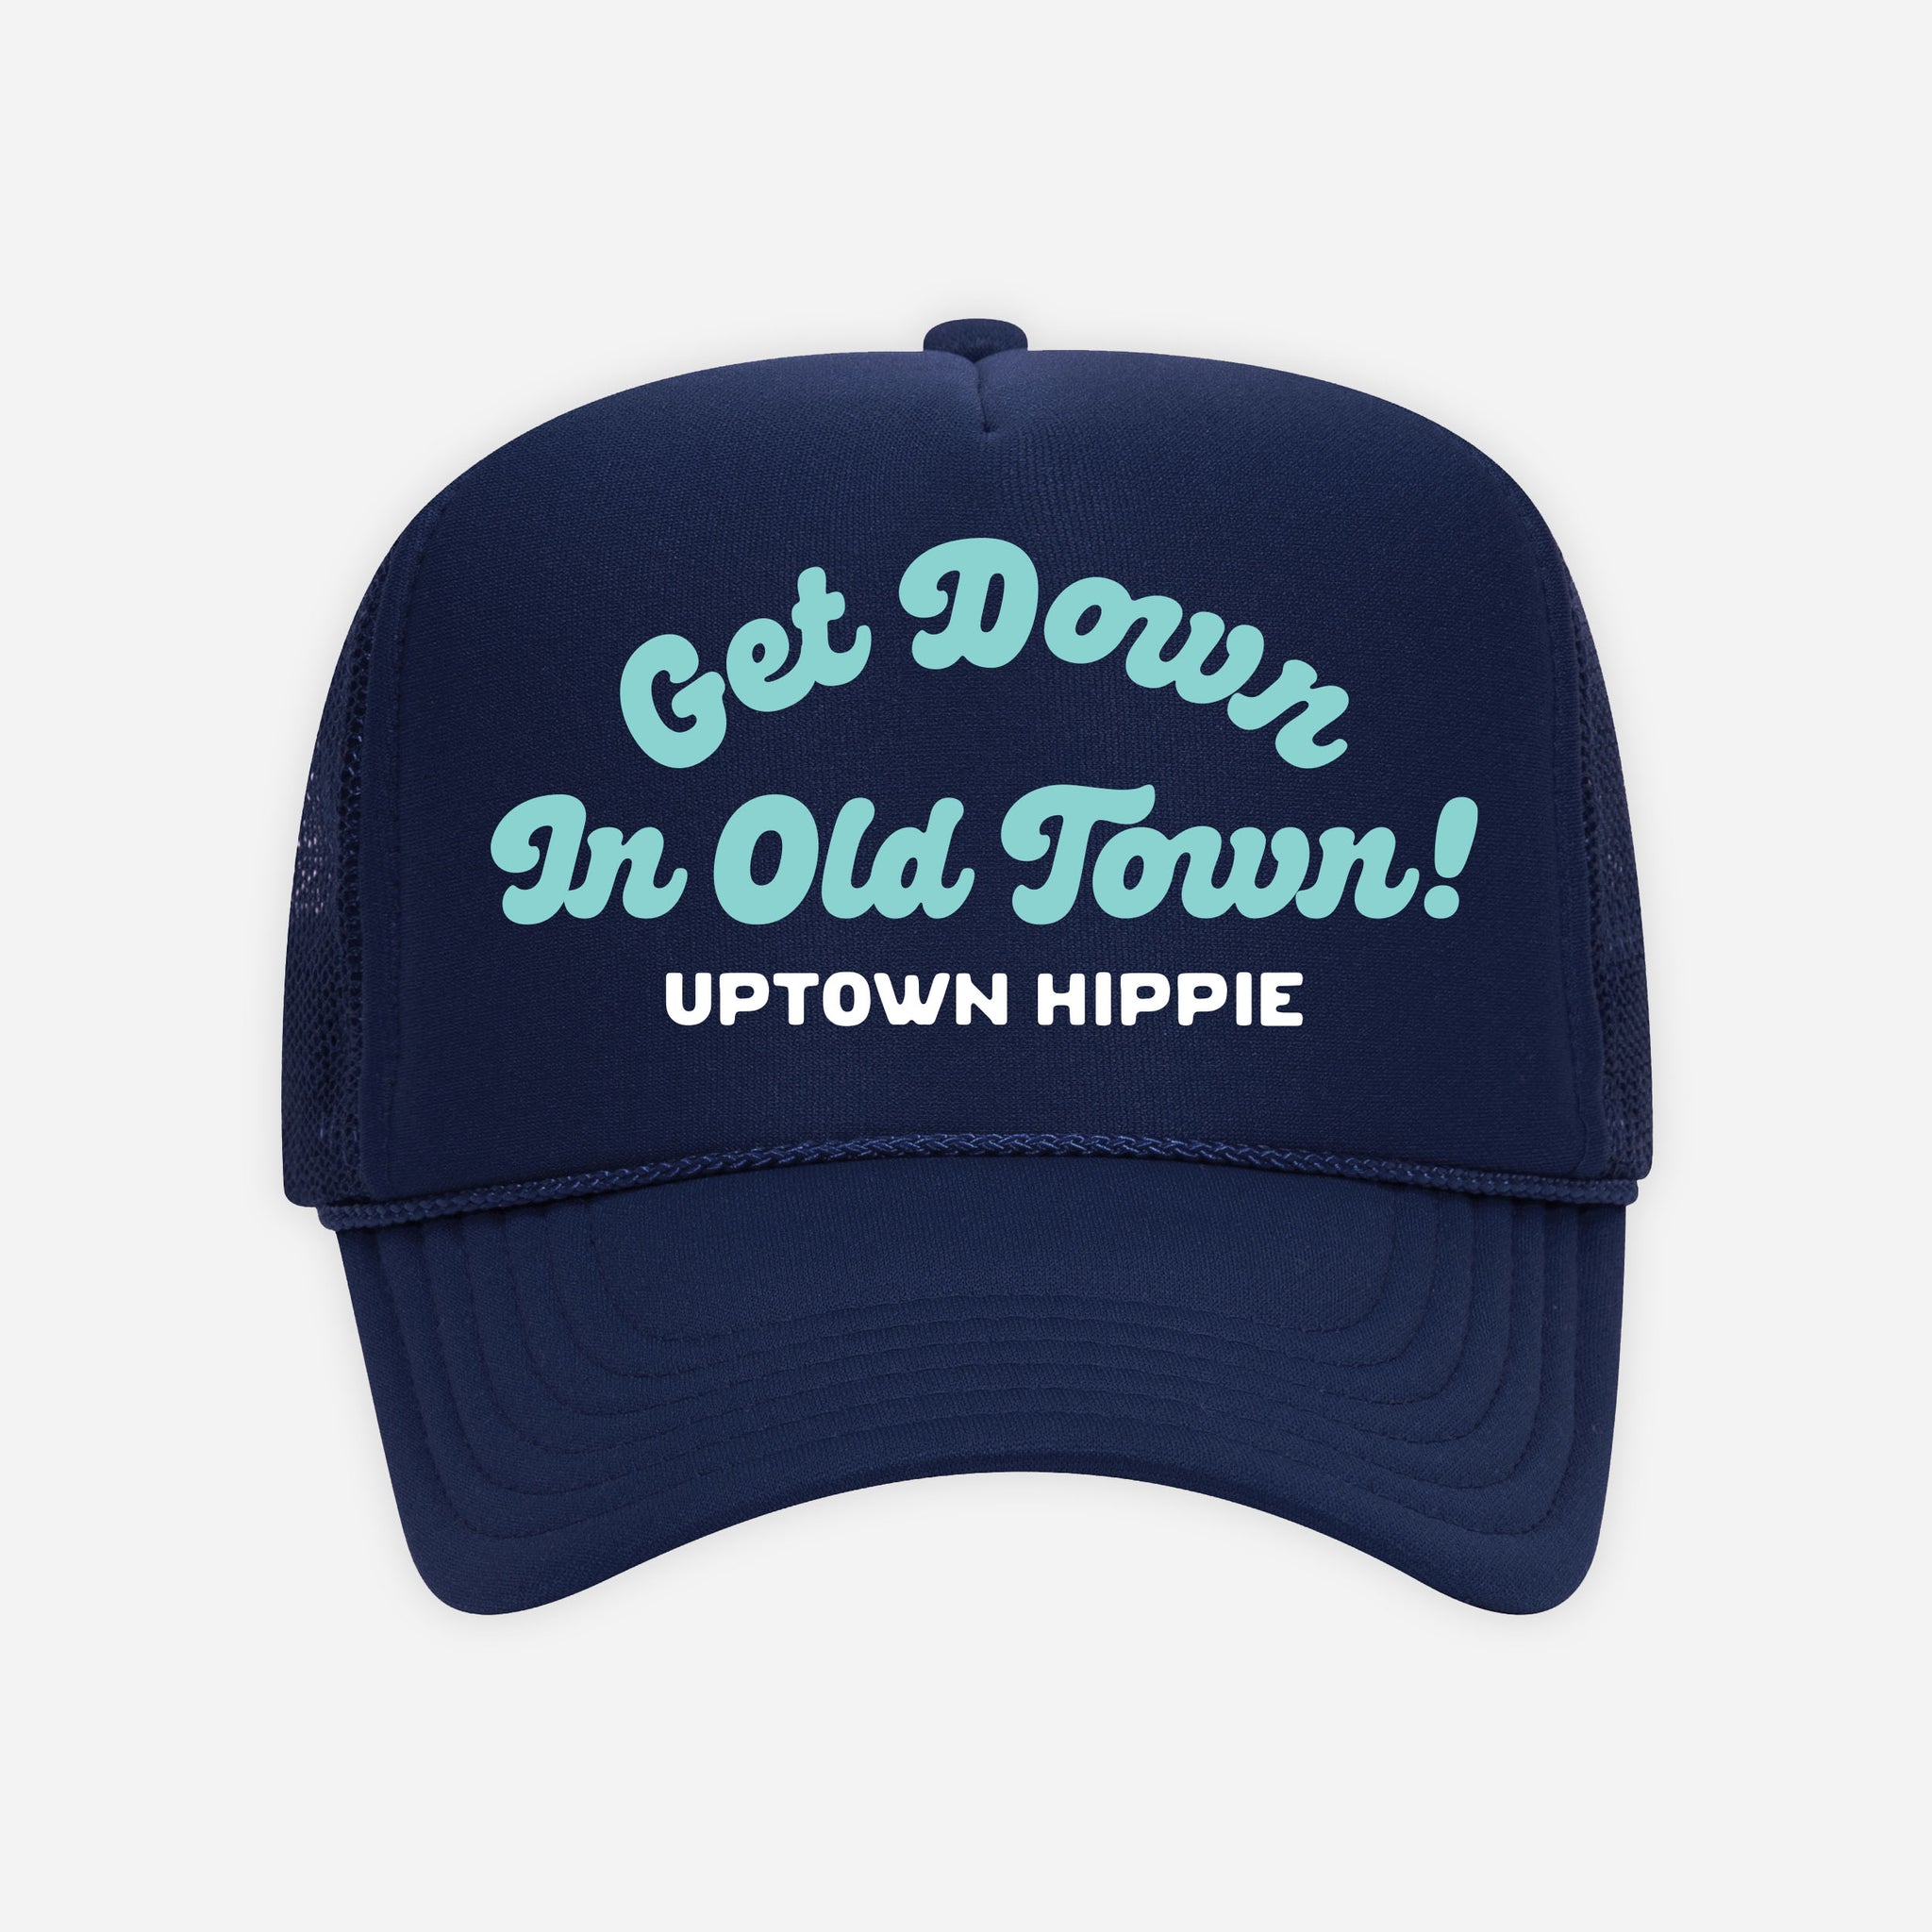 Get Down in Old Town Trucker Hat